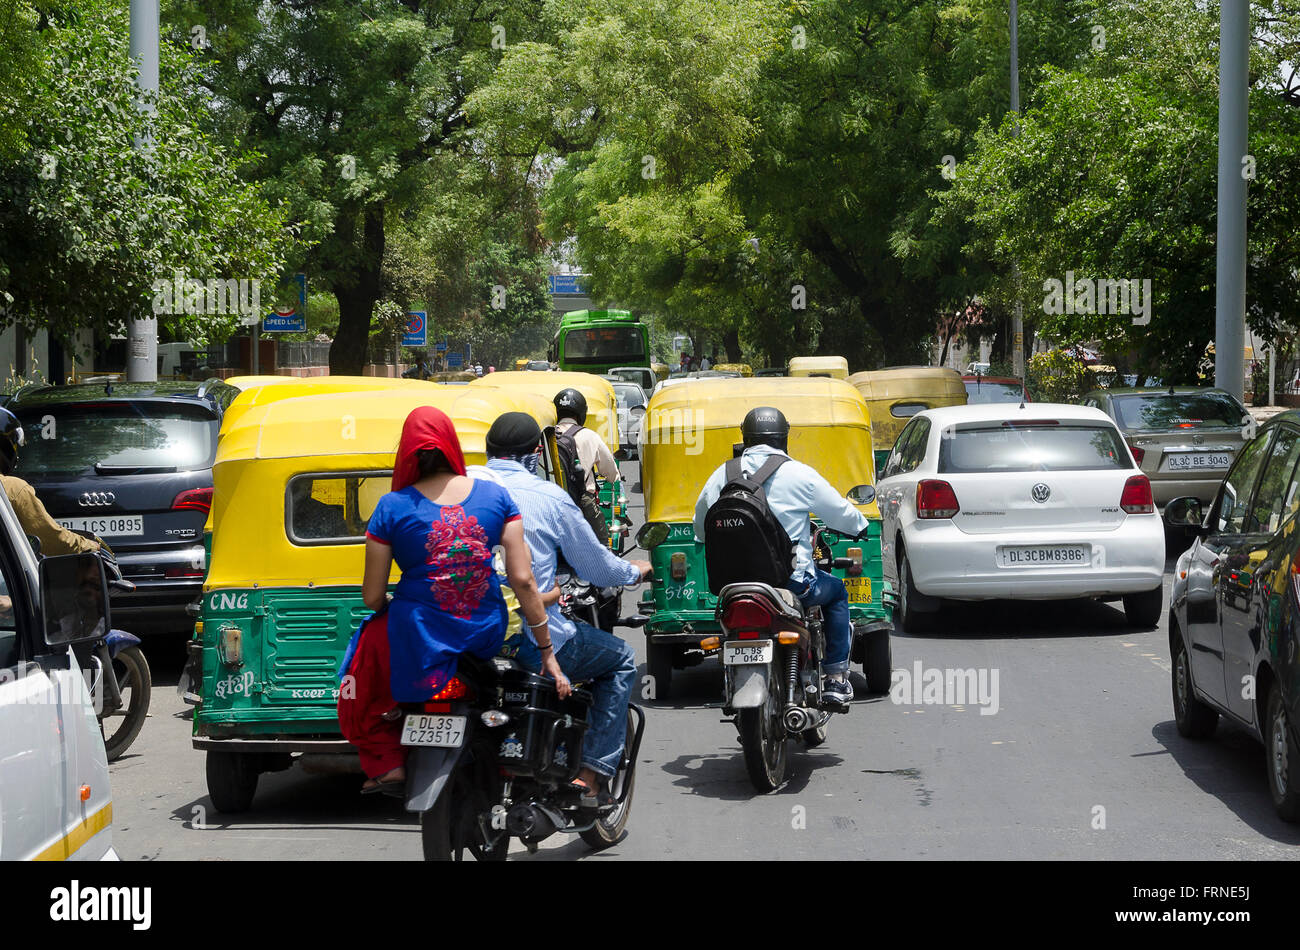 Couple on motorcycle in traffic with Tuk tuks, Delhi, India Stock Photo